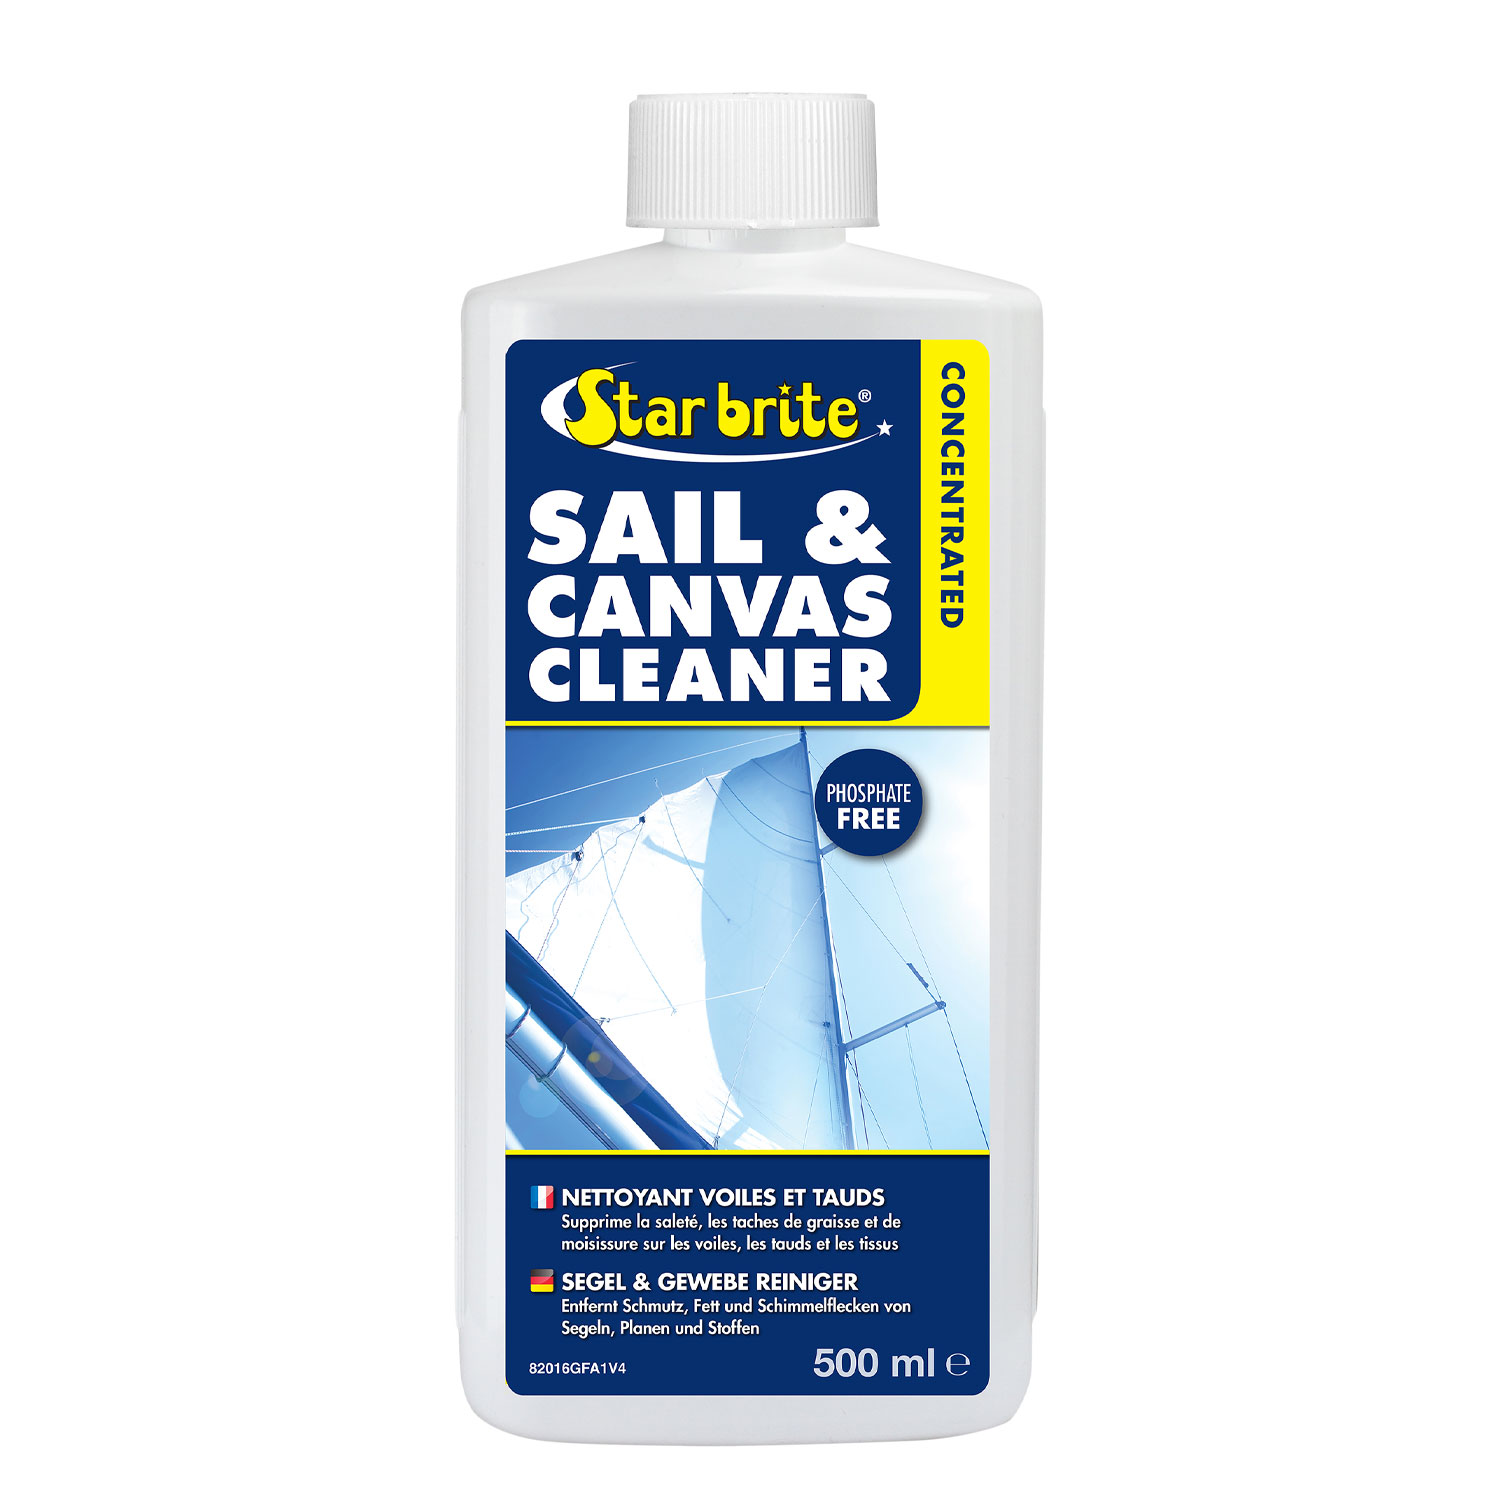 Star brite Sail & Canvas Cleaner 82016